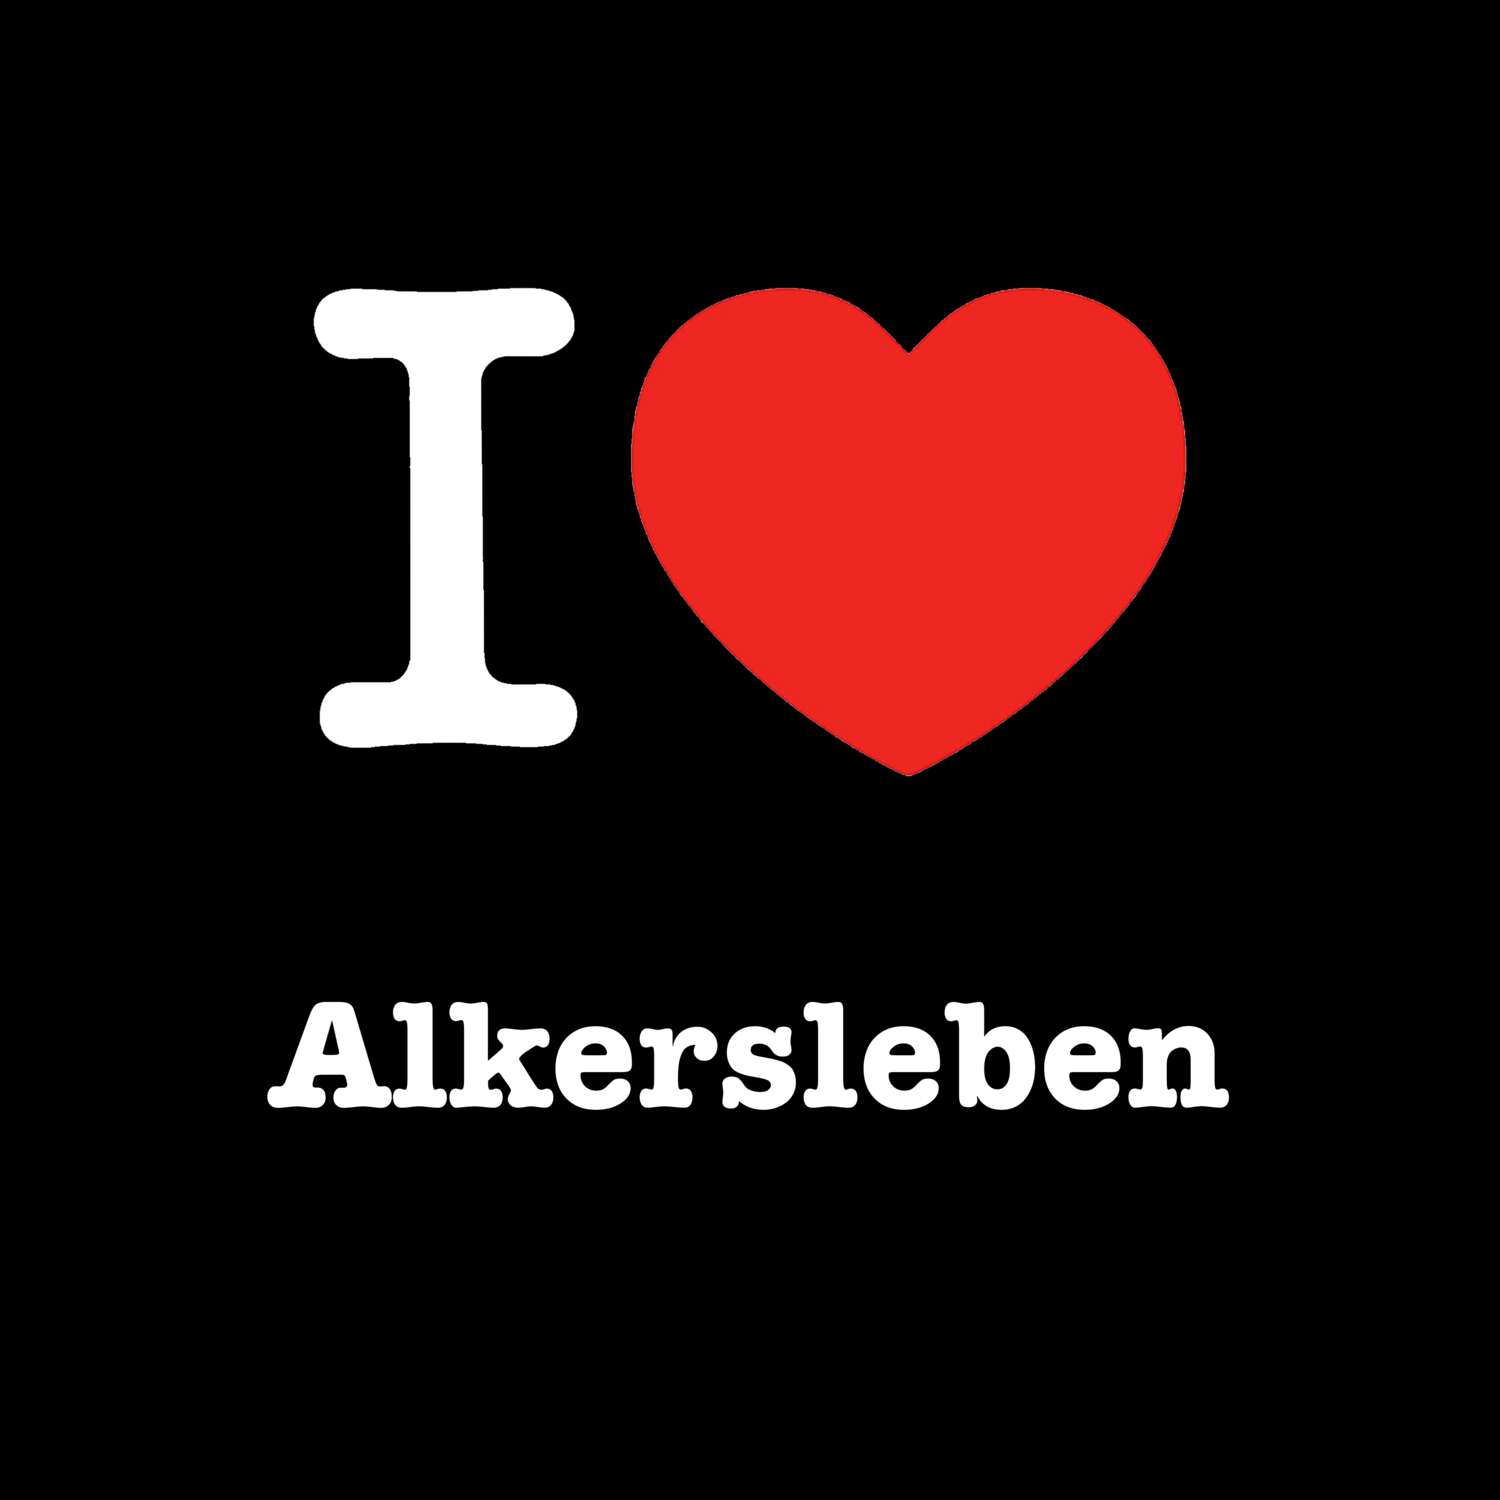 Alkersleben T-Shirt »I love«